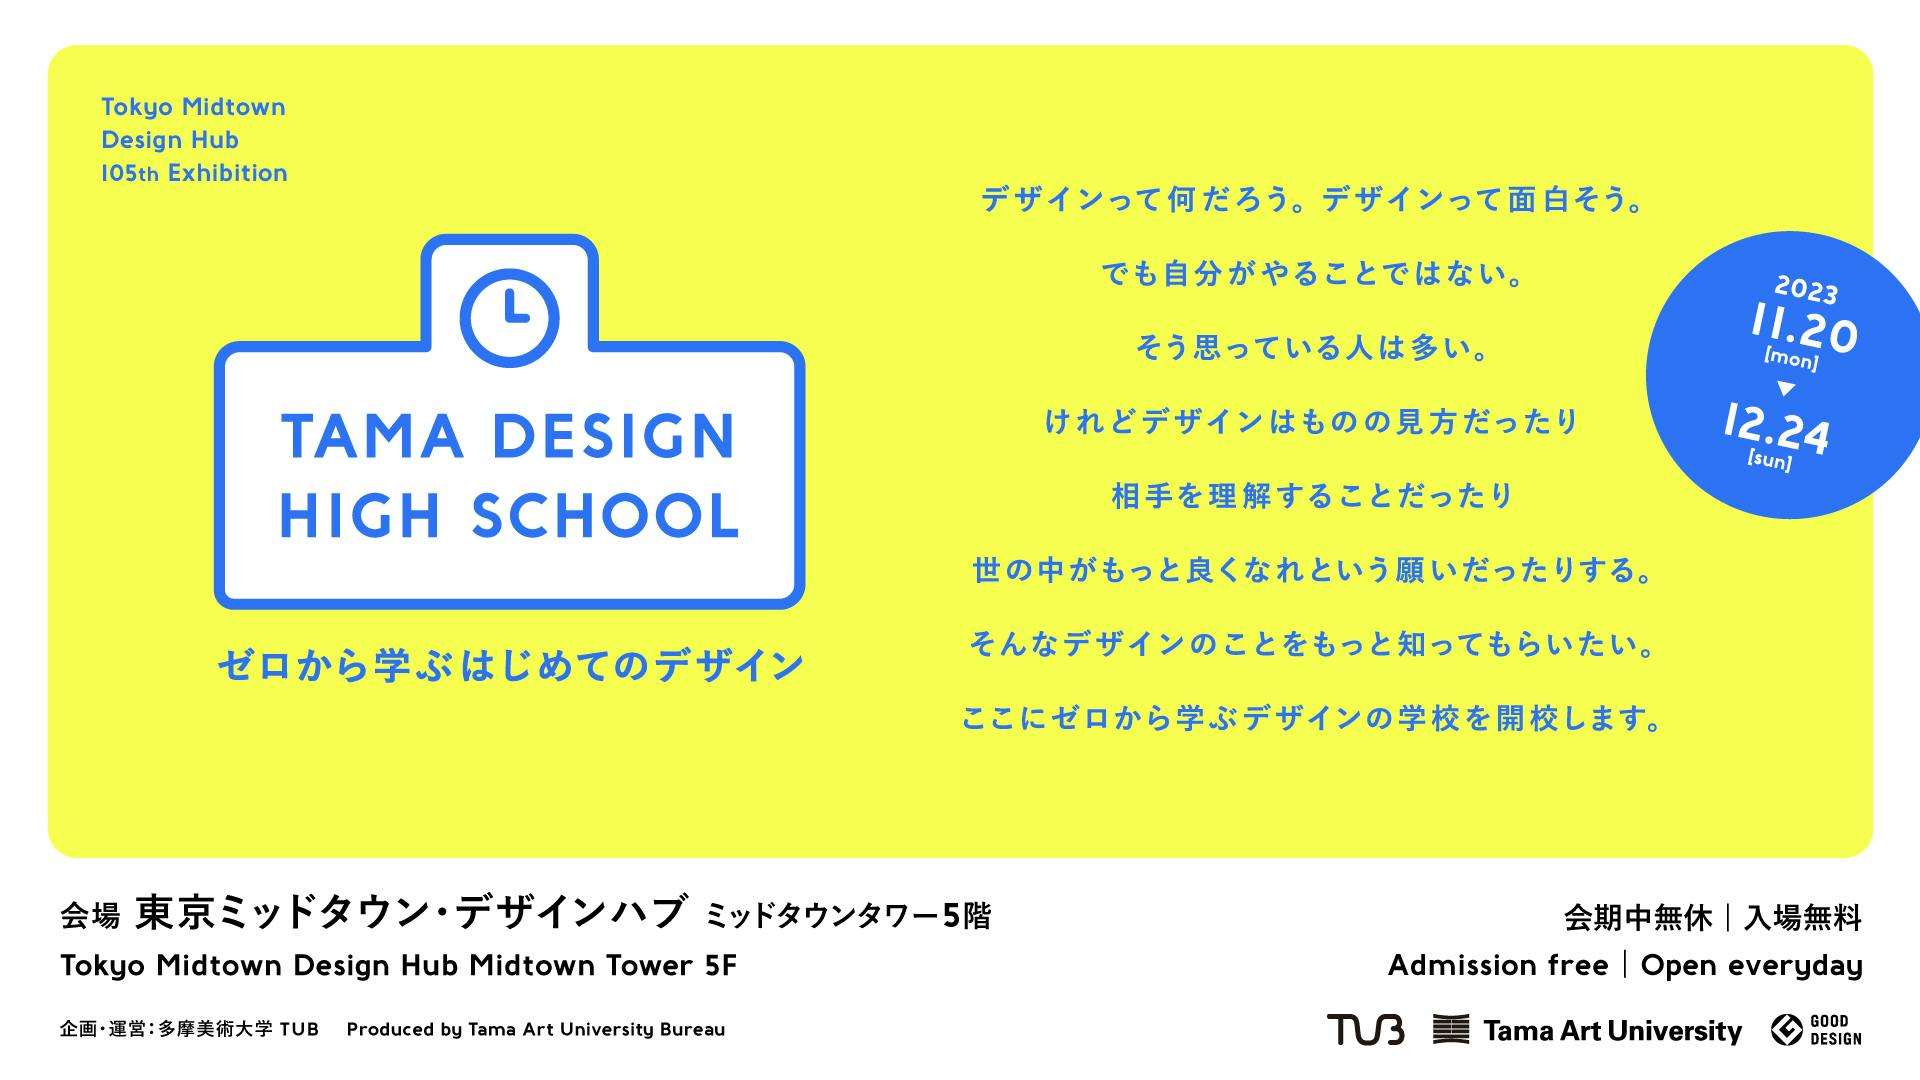 Tama Design High School